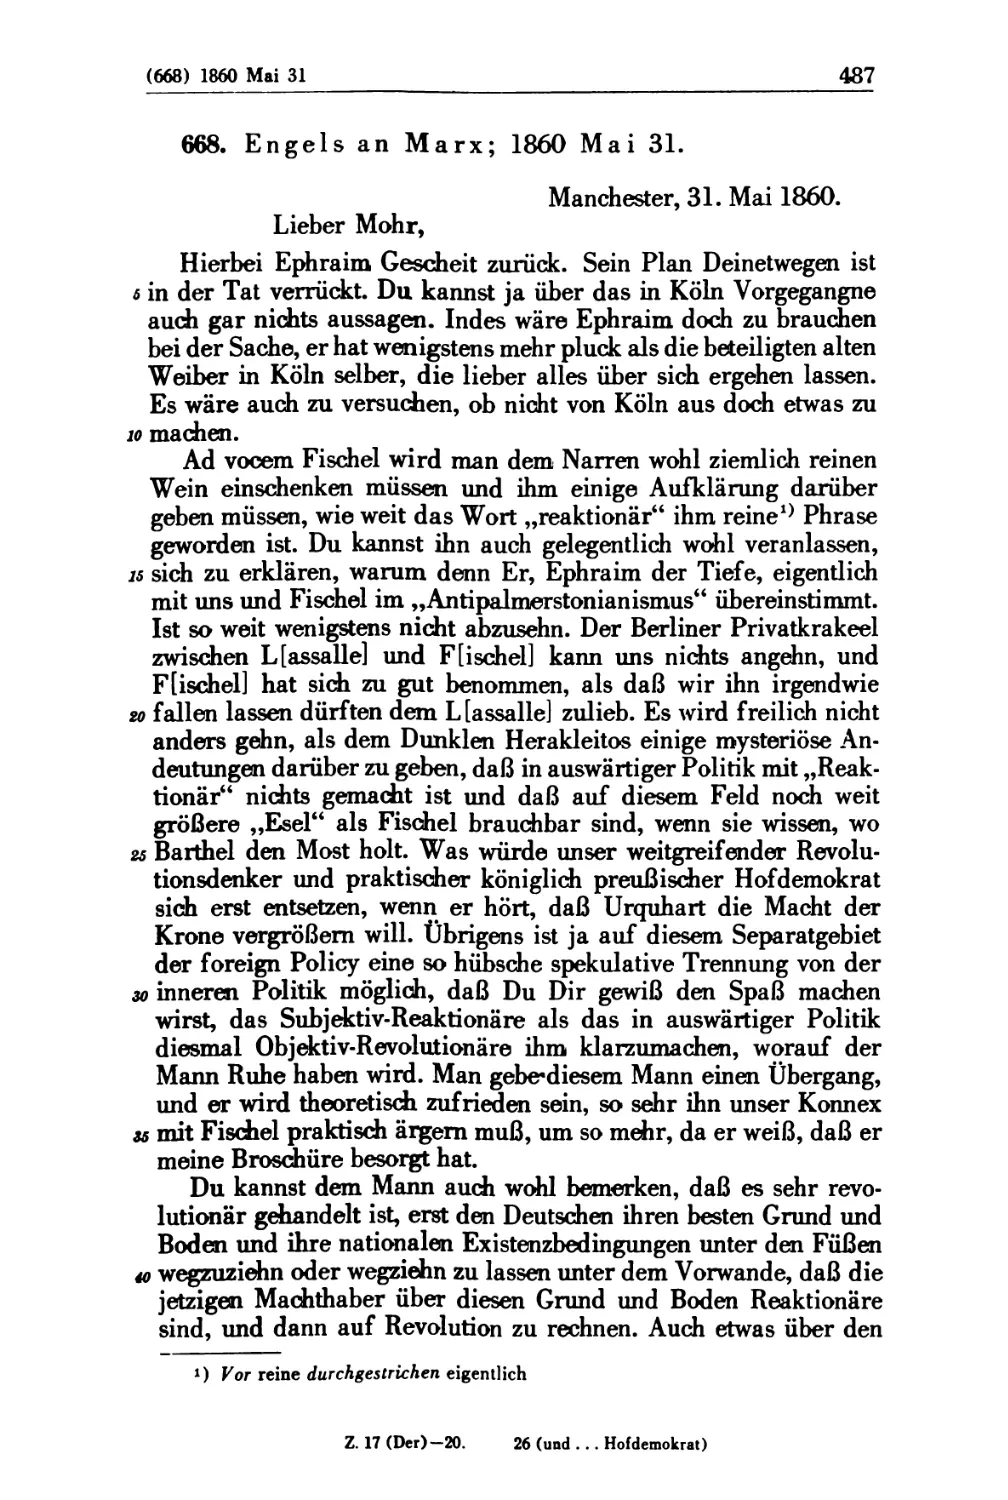 668. Engels an Marx; 1860 Mai 31